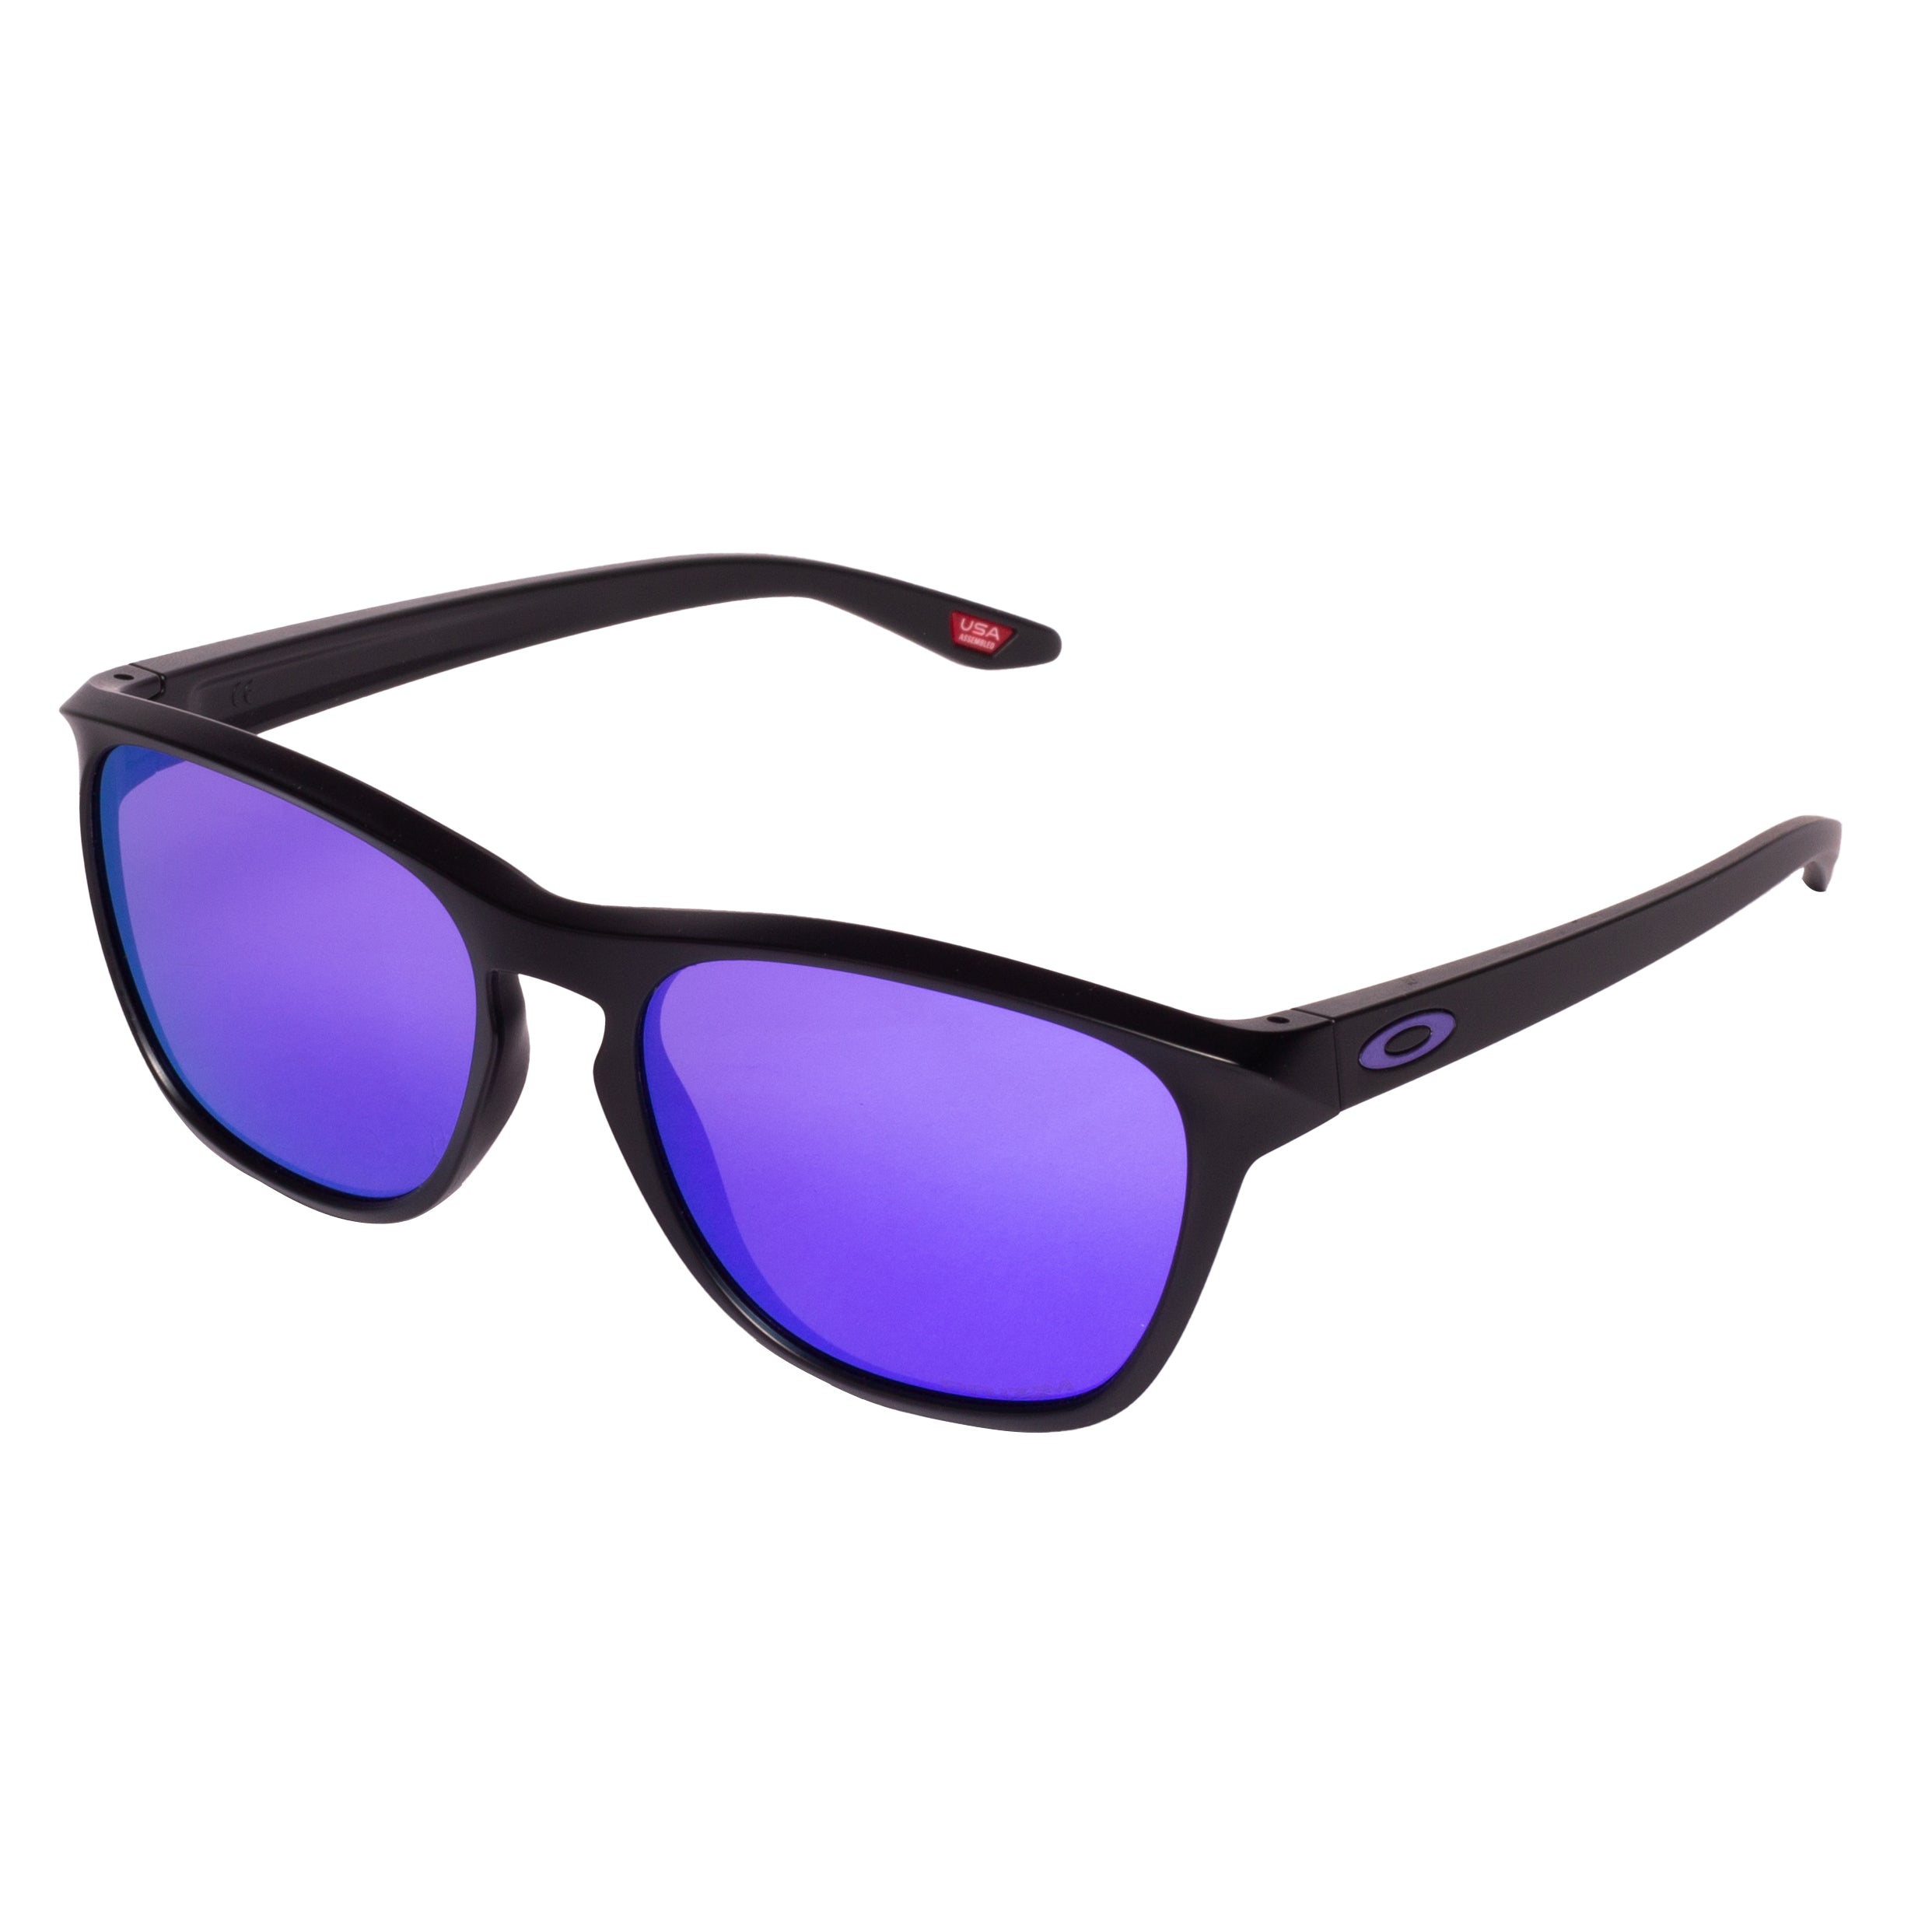 Oakley-OO9479-56-947903 Sunglasses - Premium Sunglasses from Oakley - Just Rs. 7490! Shop now at Laxmi Opticians